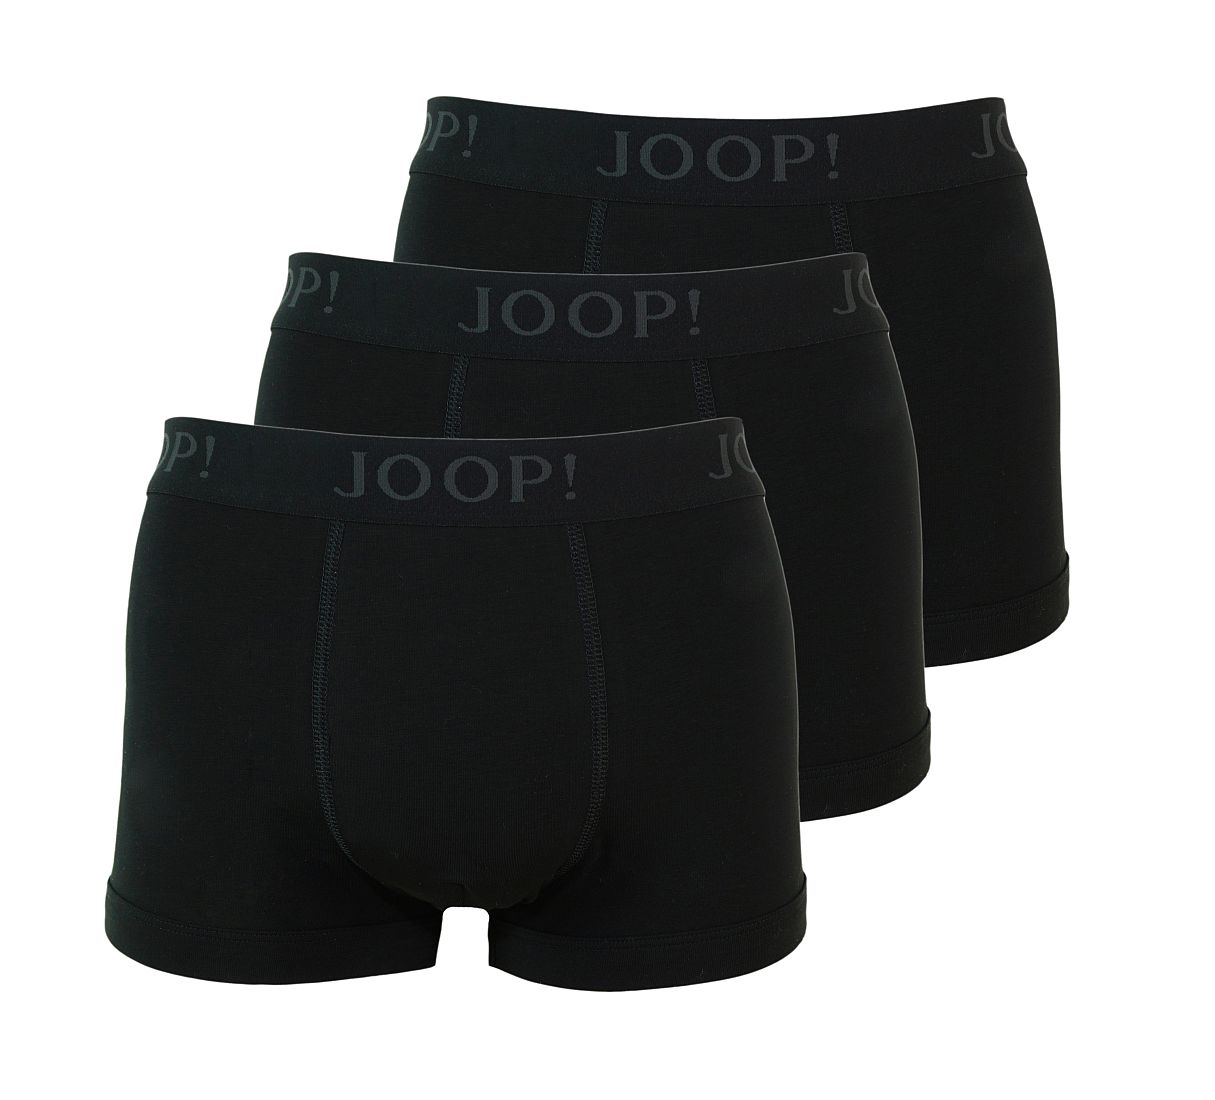 JOOP! Trunks Shorts 3er Pack 10001475 001 schwarz S17-JPST1